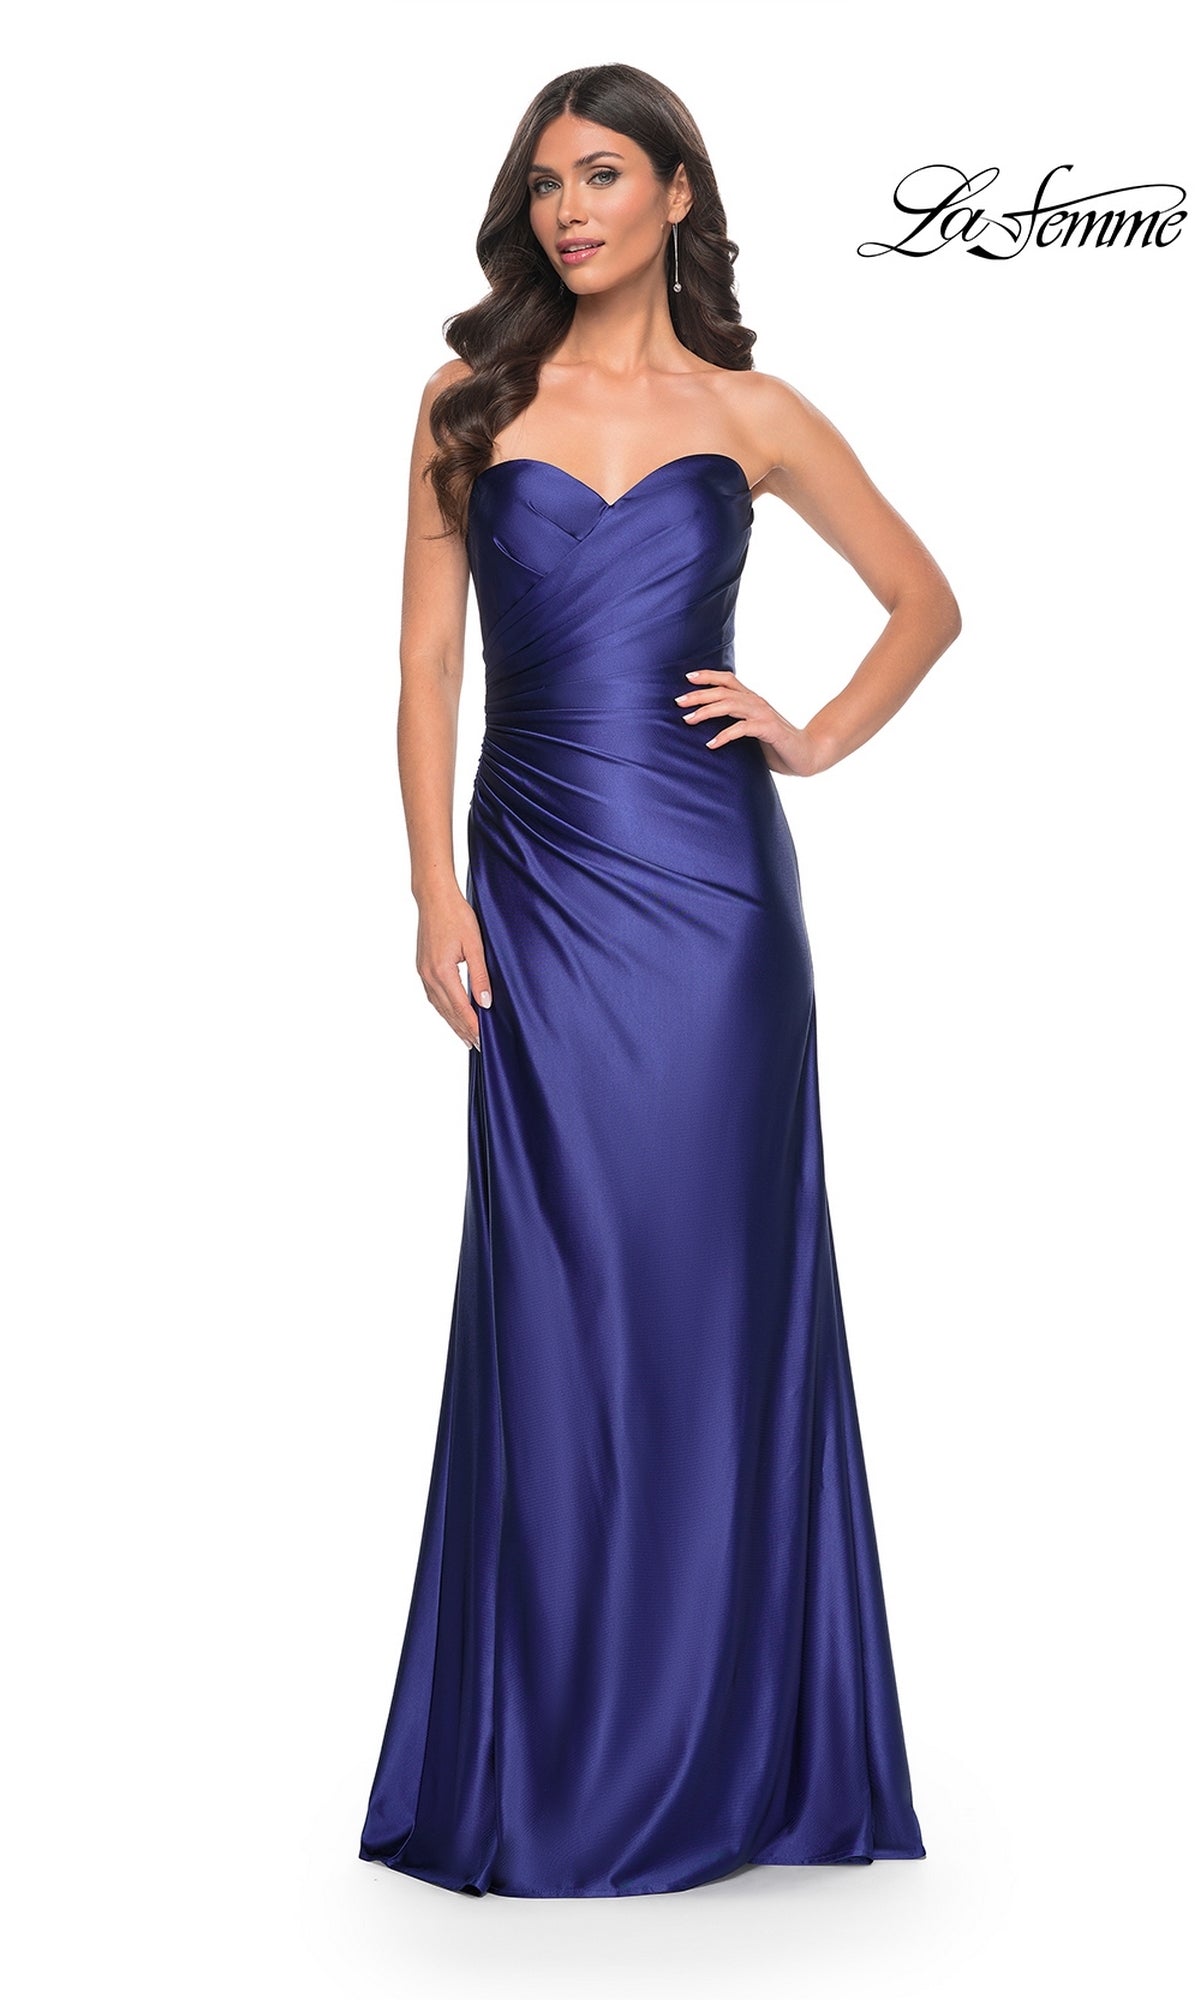 Marine Blue La Femme 32159 Formal Prom Dress